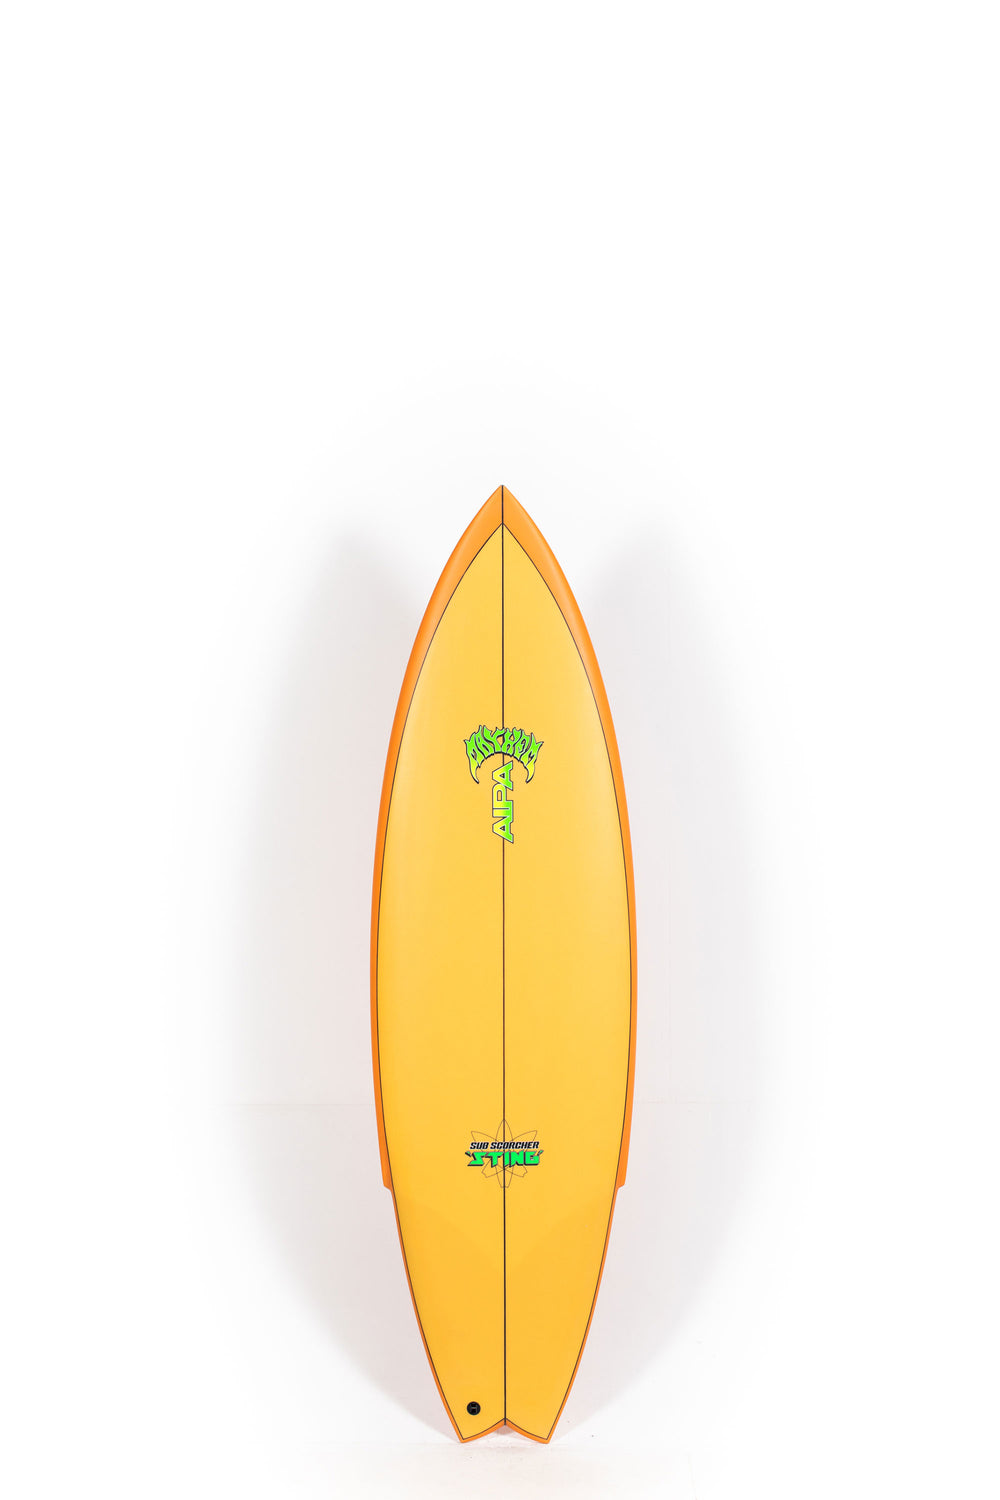 Pukas Surf Shop - Lost Surfboard - SUB SCORCHER STING by Mayhem x Brink - 6’0” x 20,50